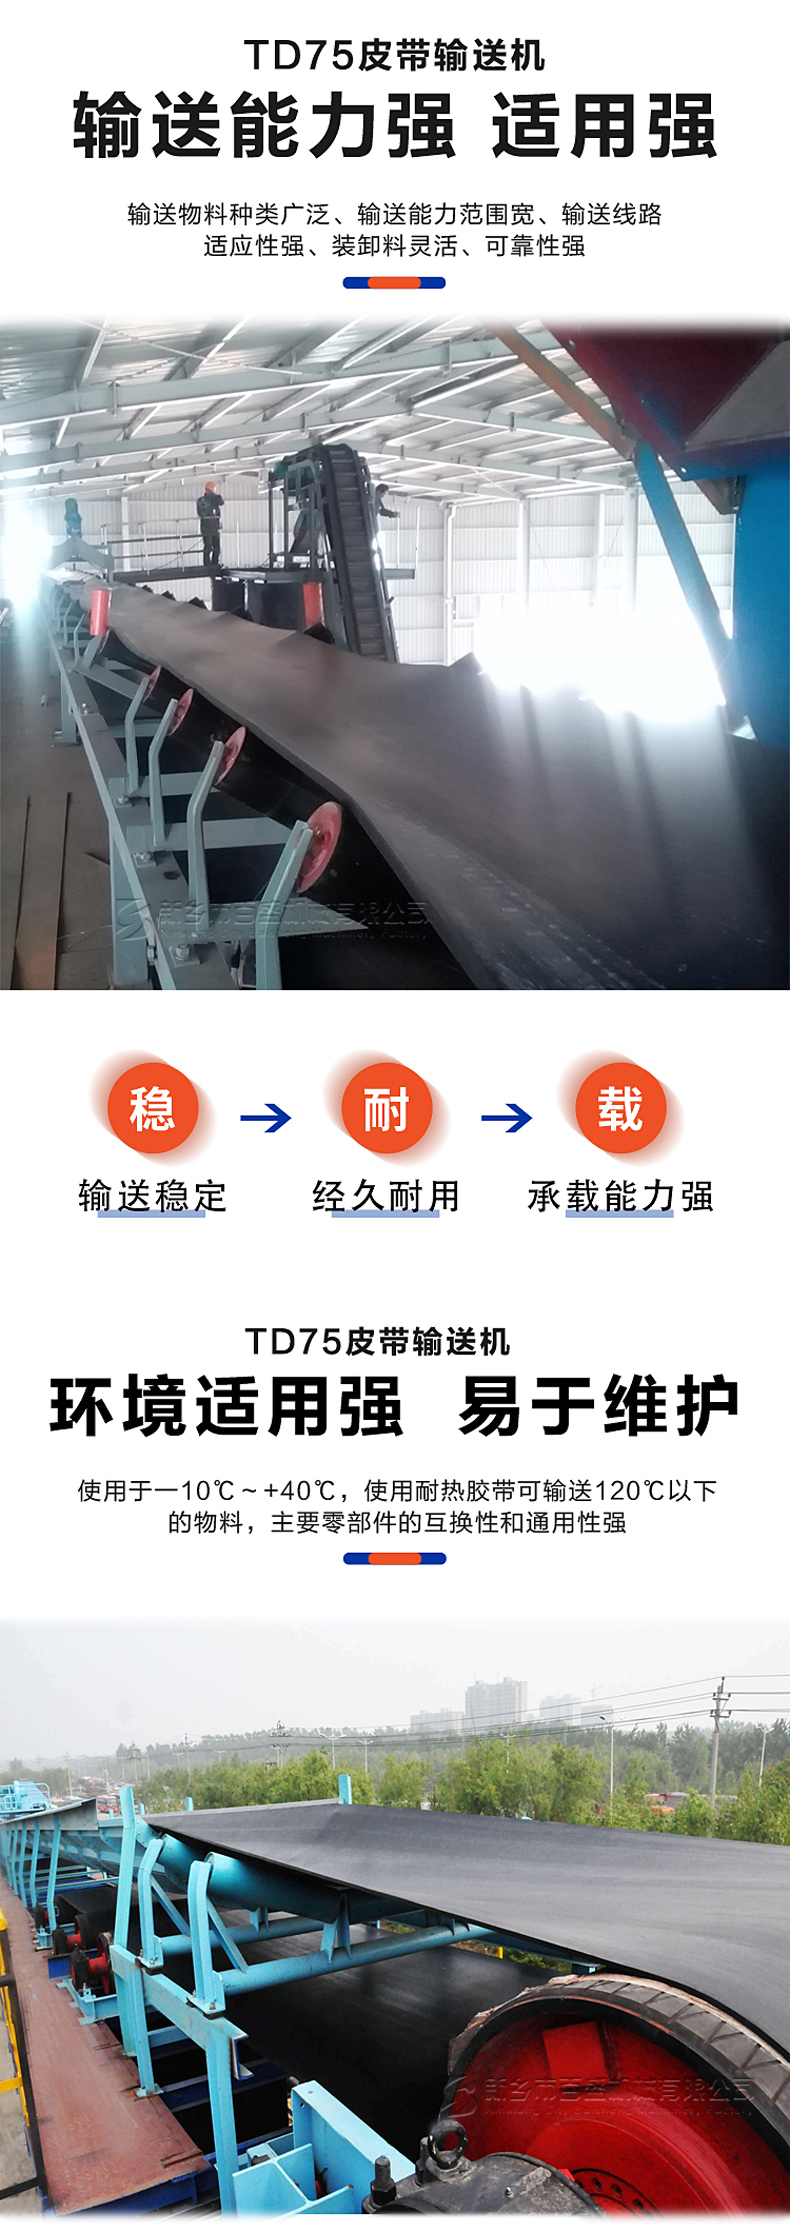 TD75帶式輸送機特點